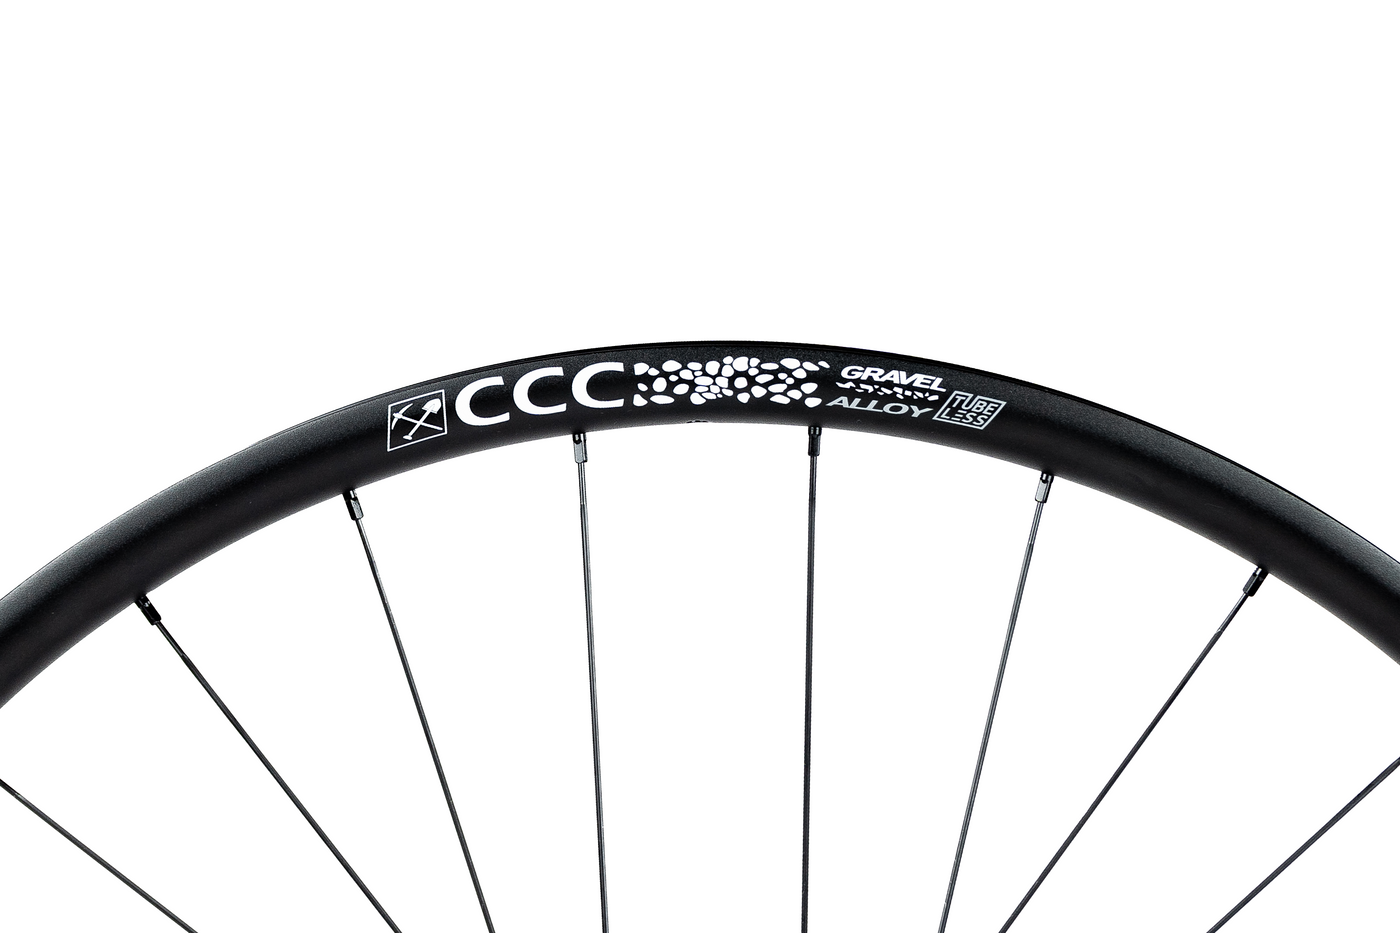 CCC 700c Alloy Gravel Rear Wheel